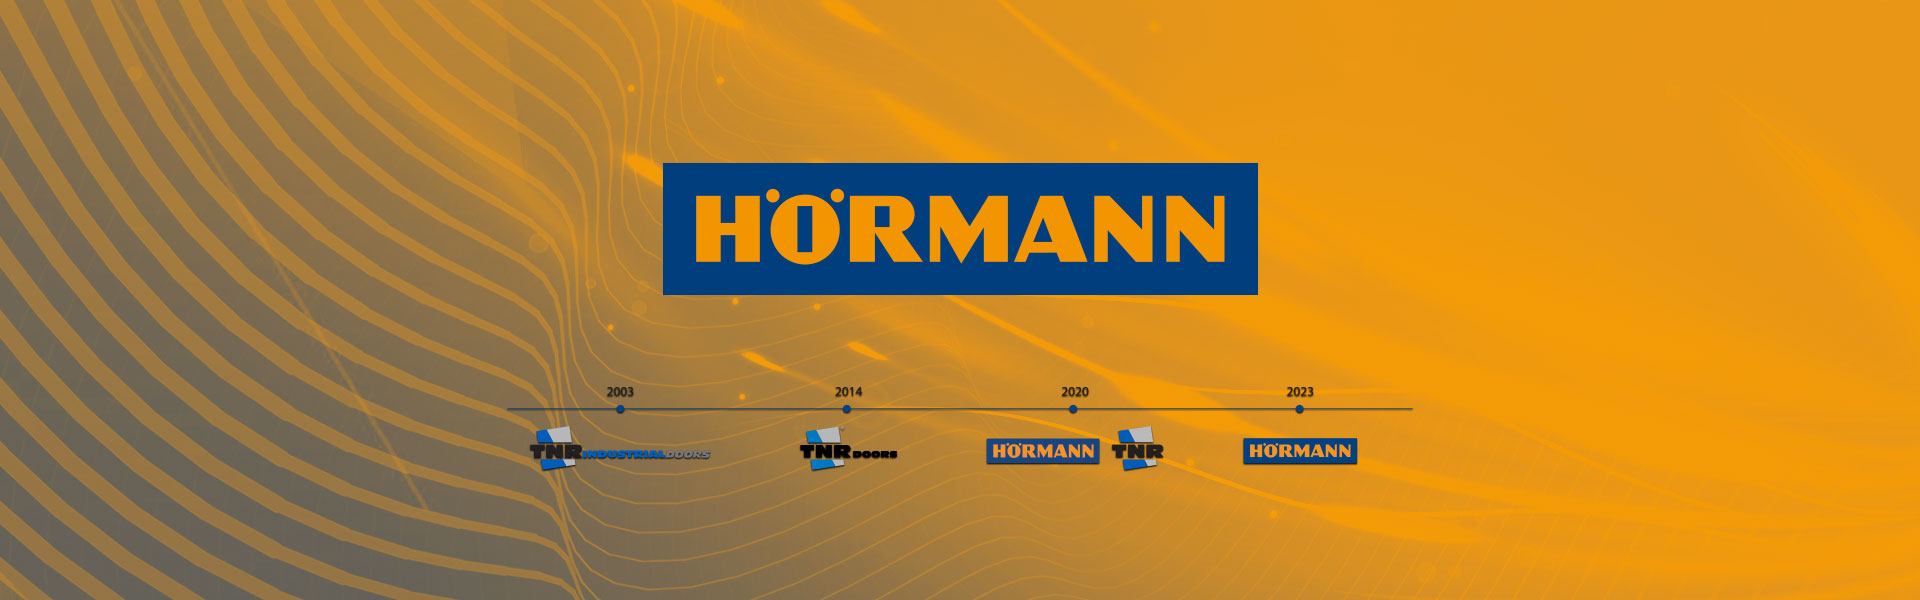 Hormann TNR